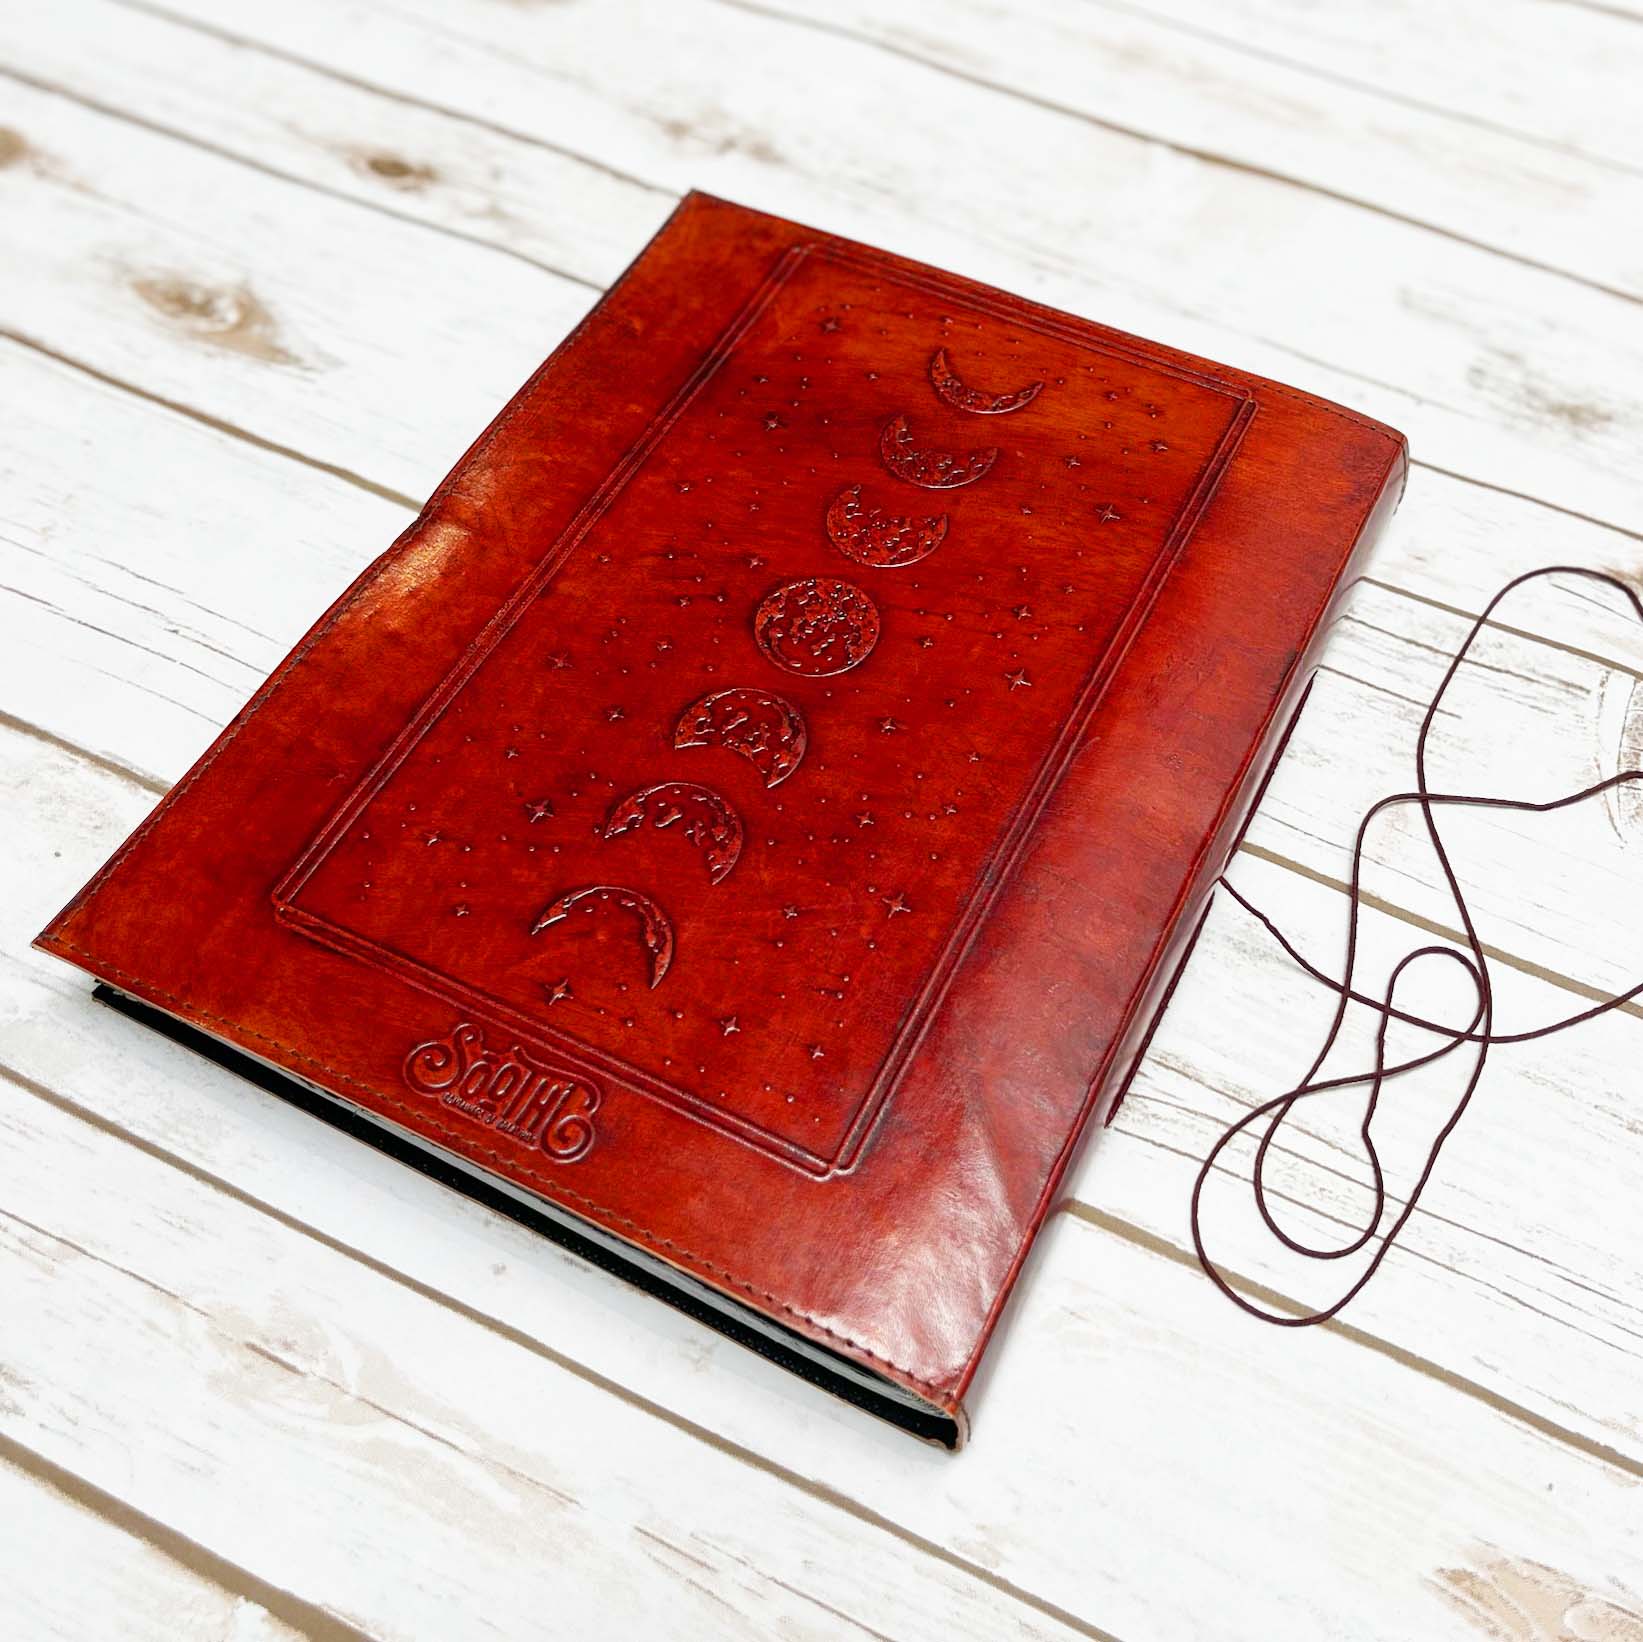 Mystic Tarot: 10x13 Leather Journal